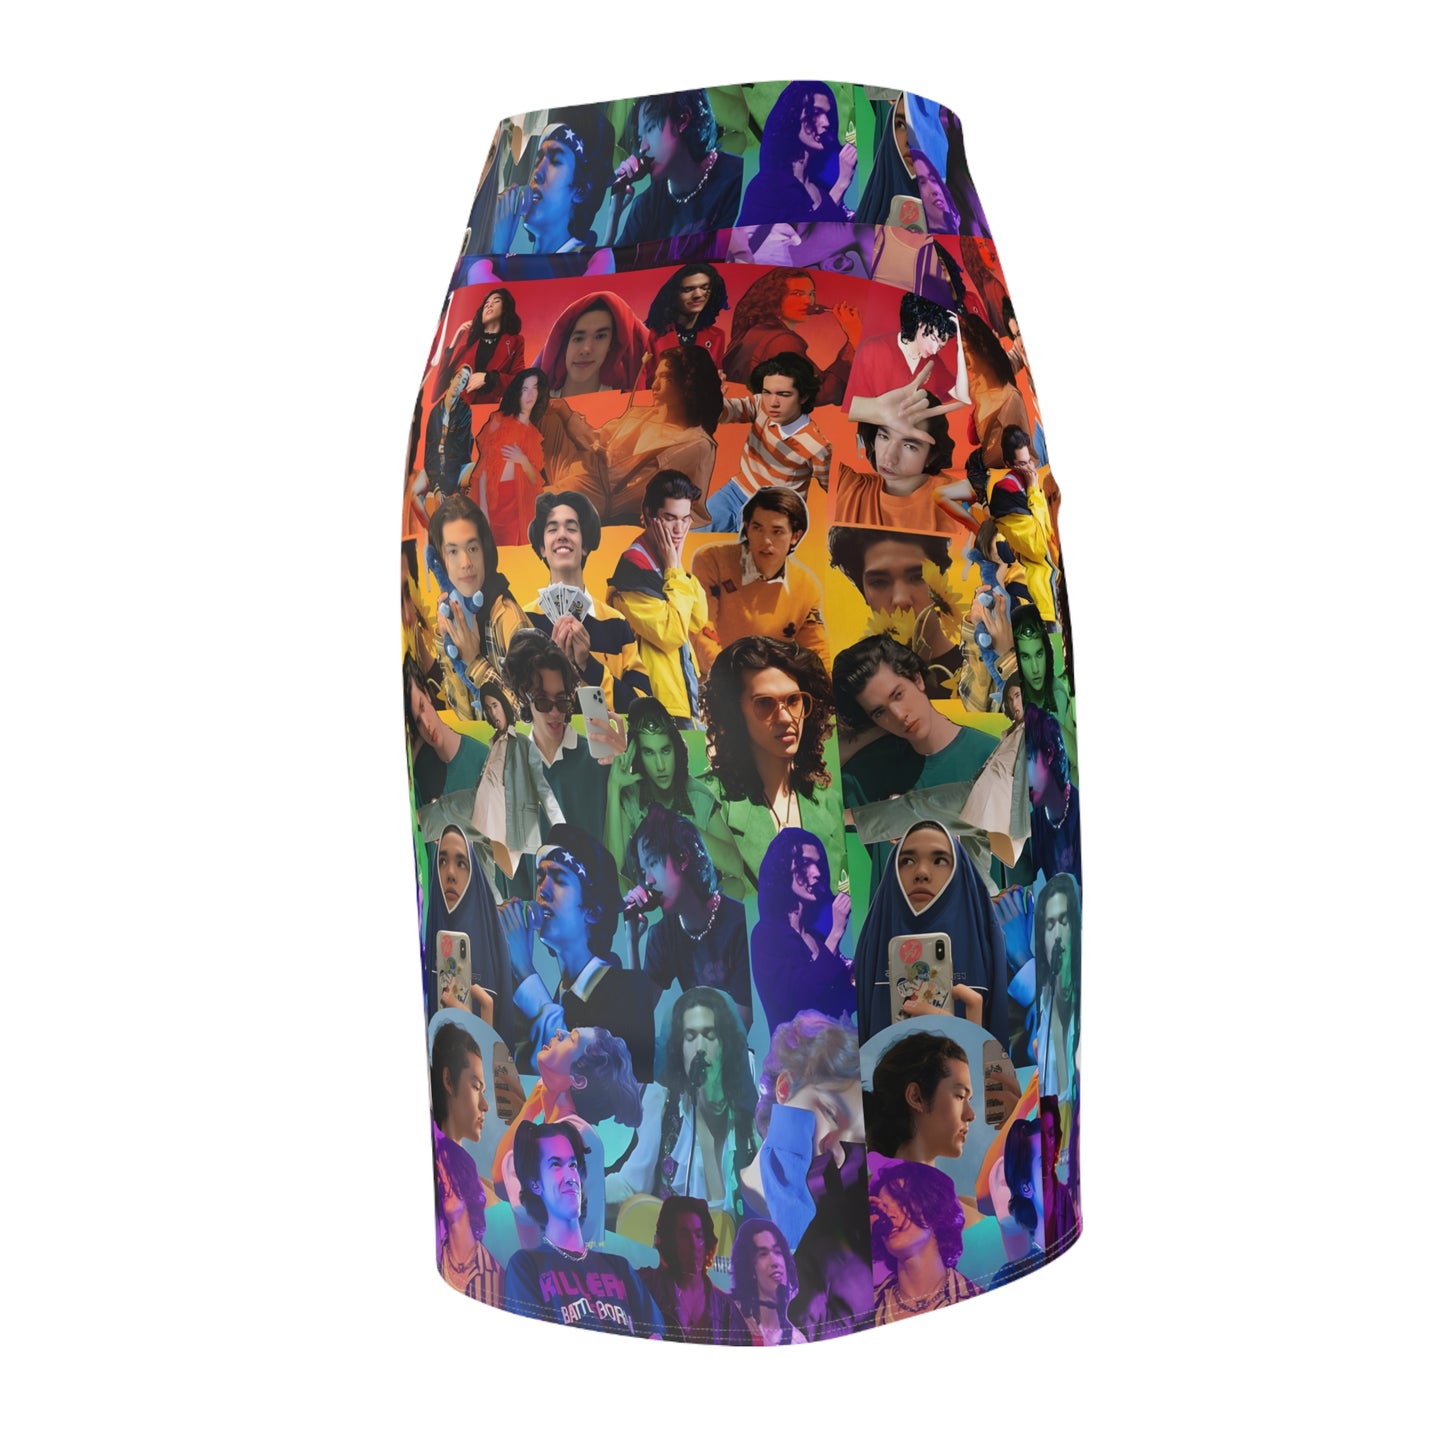 Conan Grey Rainbow Photo Collage Women's Pencil Skirt